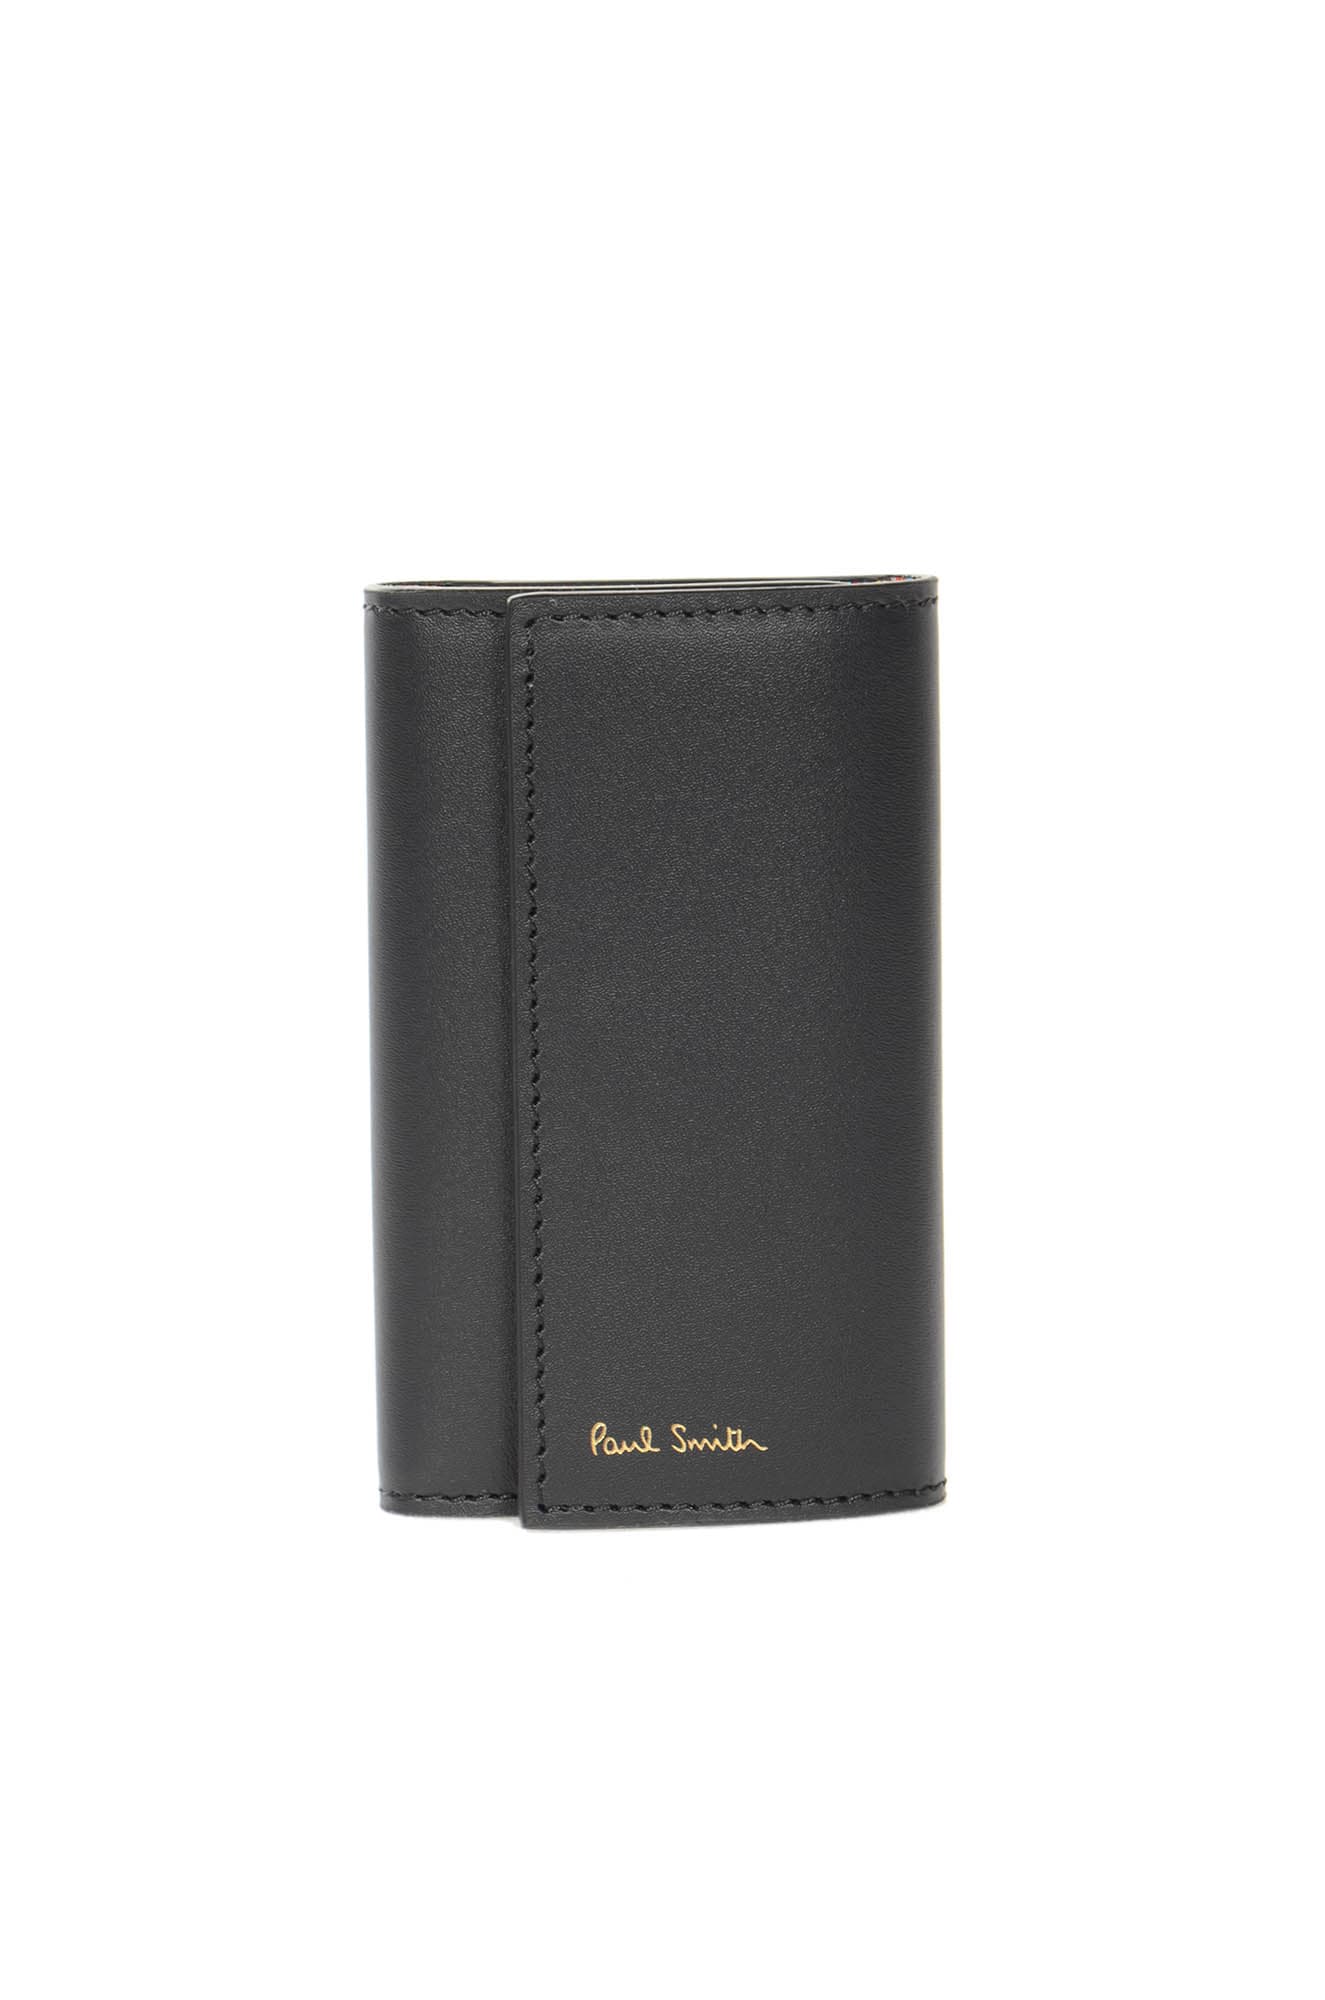 Paul Smith Keycase Wallet